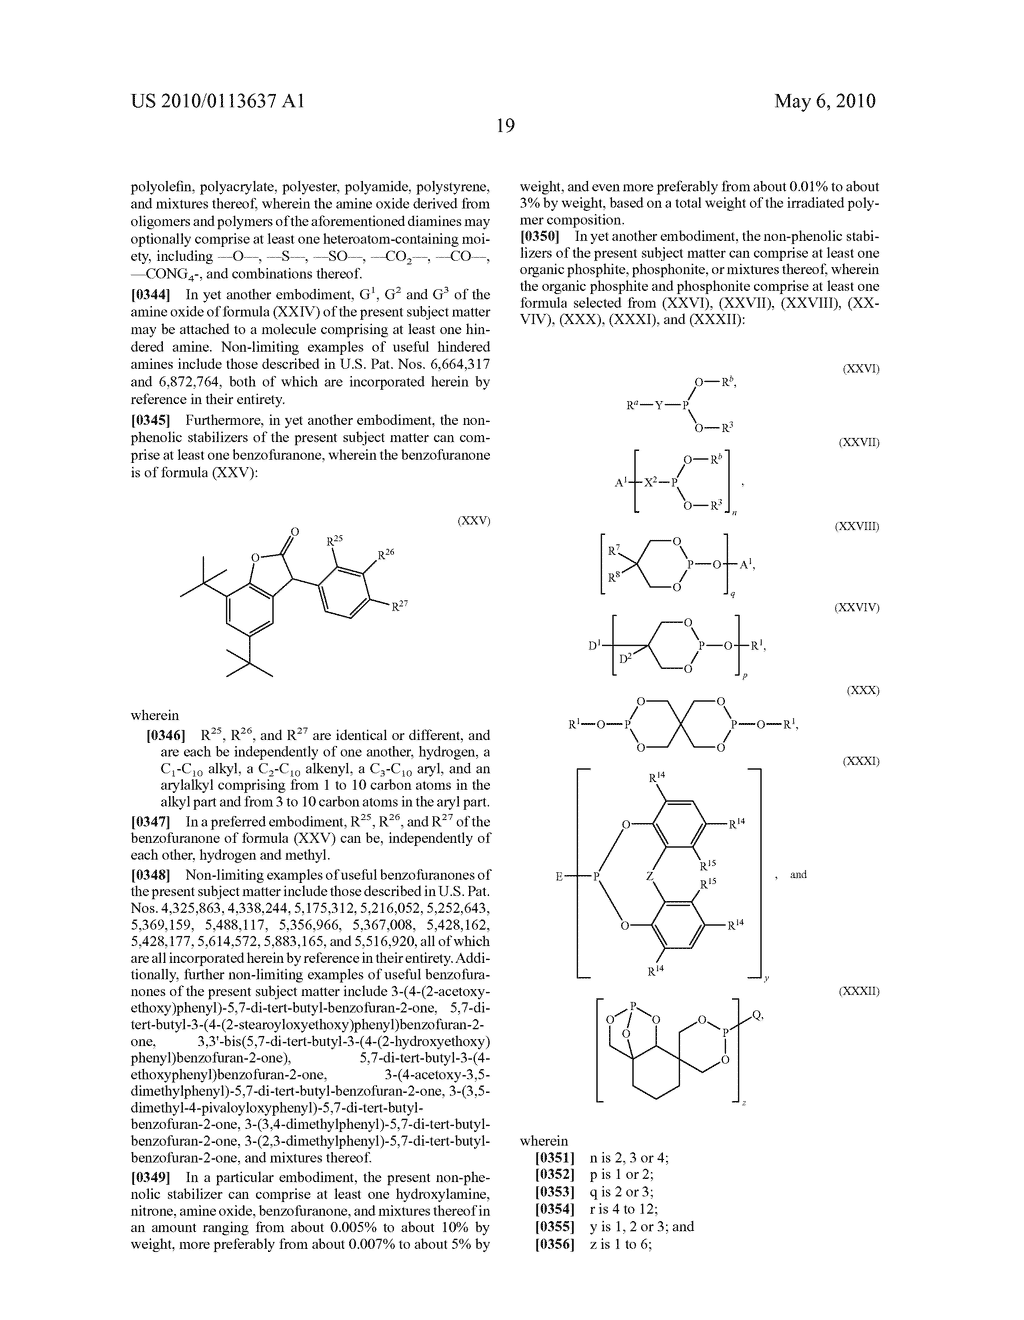 IRRADIATED POLYOLEFIN COMPOSITION COMPRISING A NON-PHENOLIC STABILIZER - diagram, schematic, and image 20